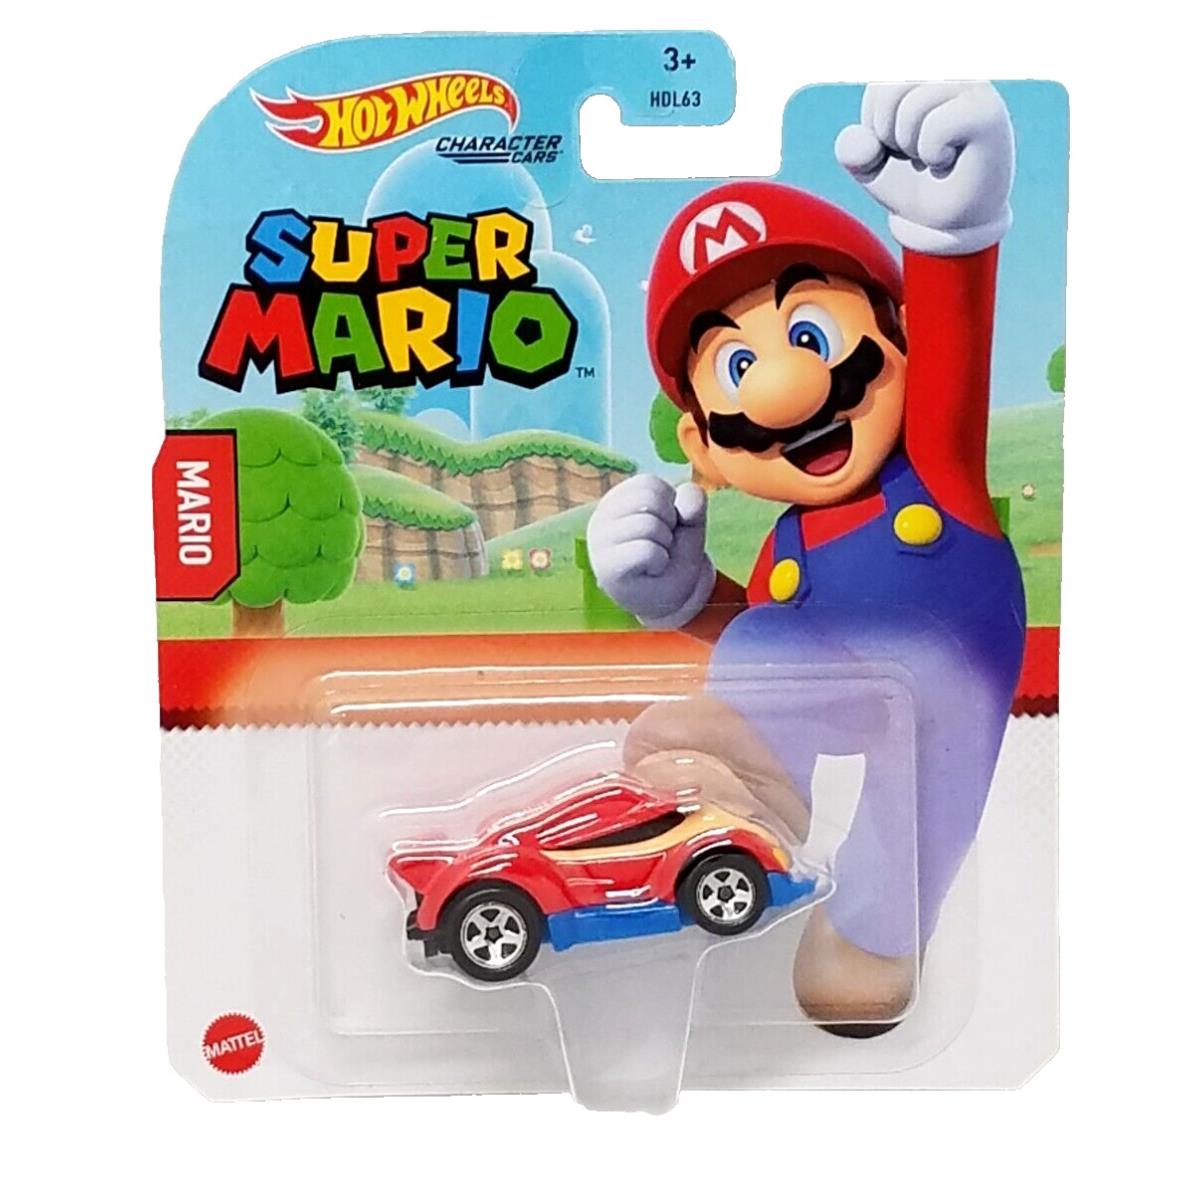 Hot Wheels Character Cars Super Mario Complete Set OF 6 Mattel